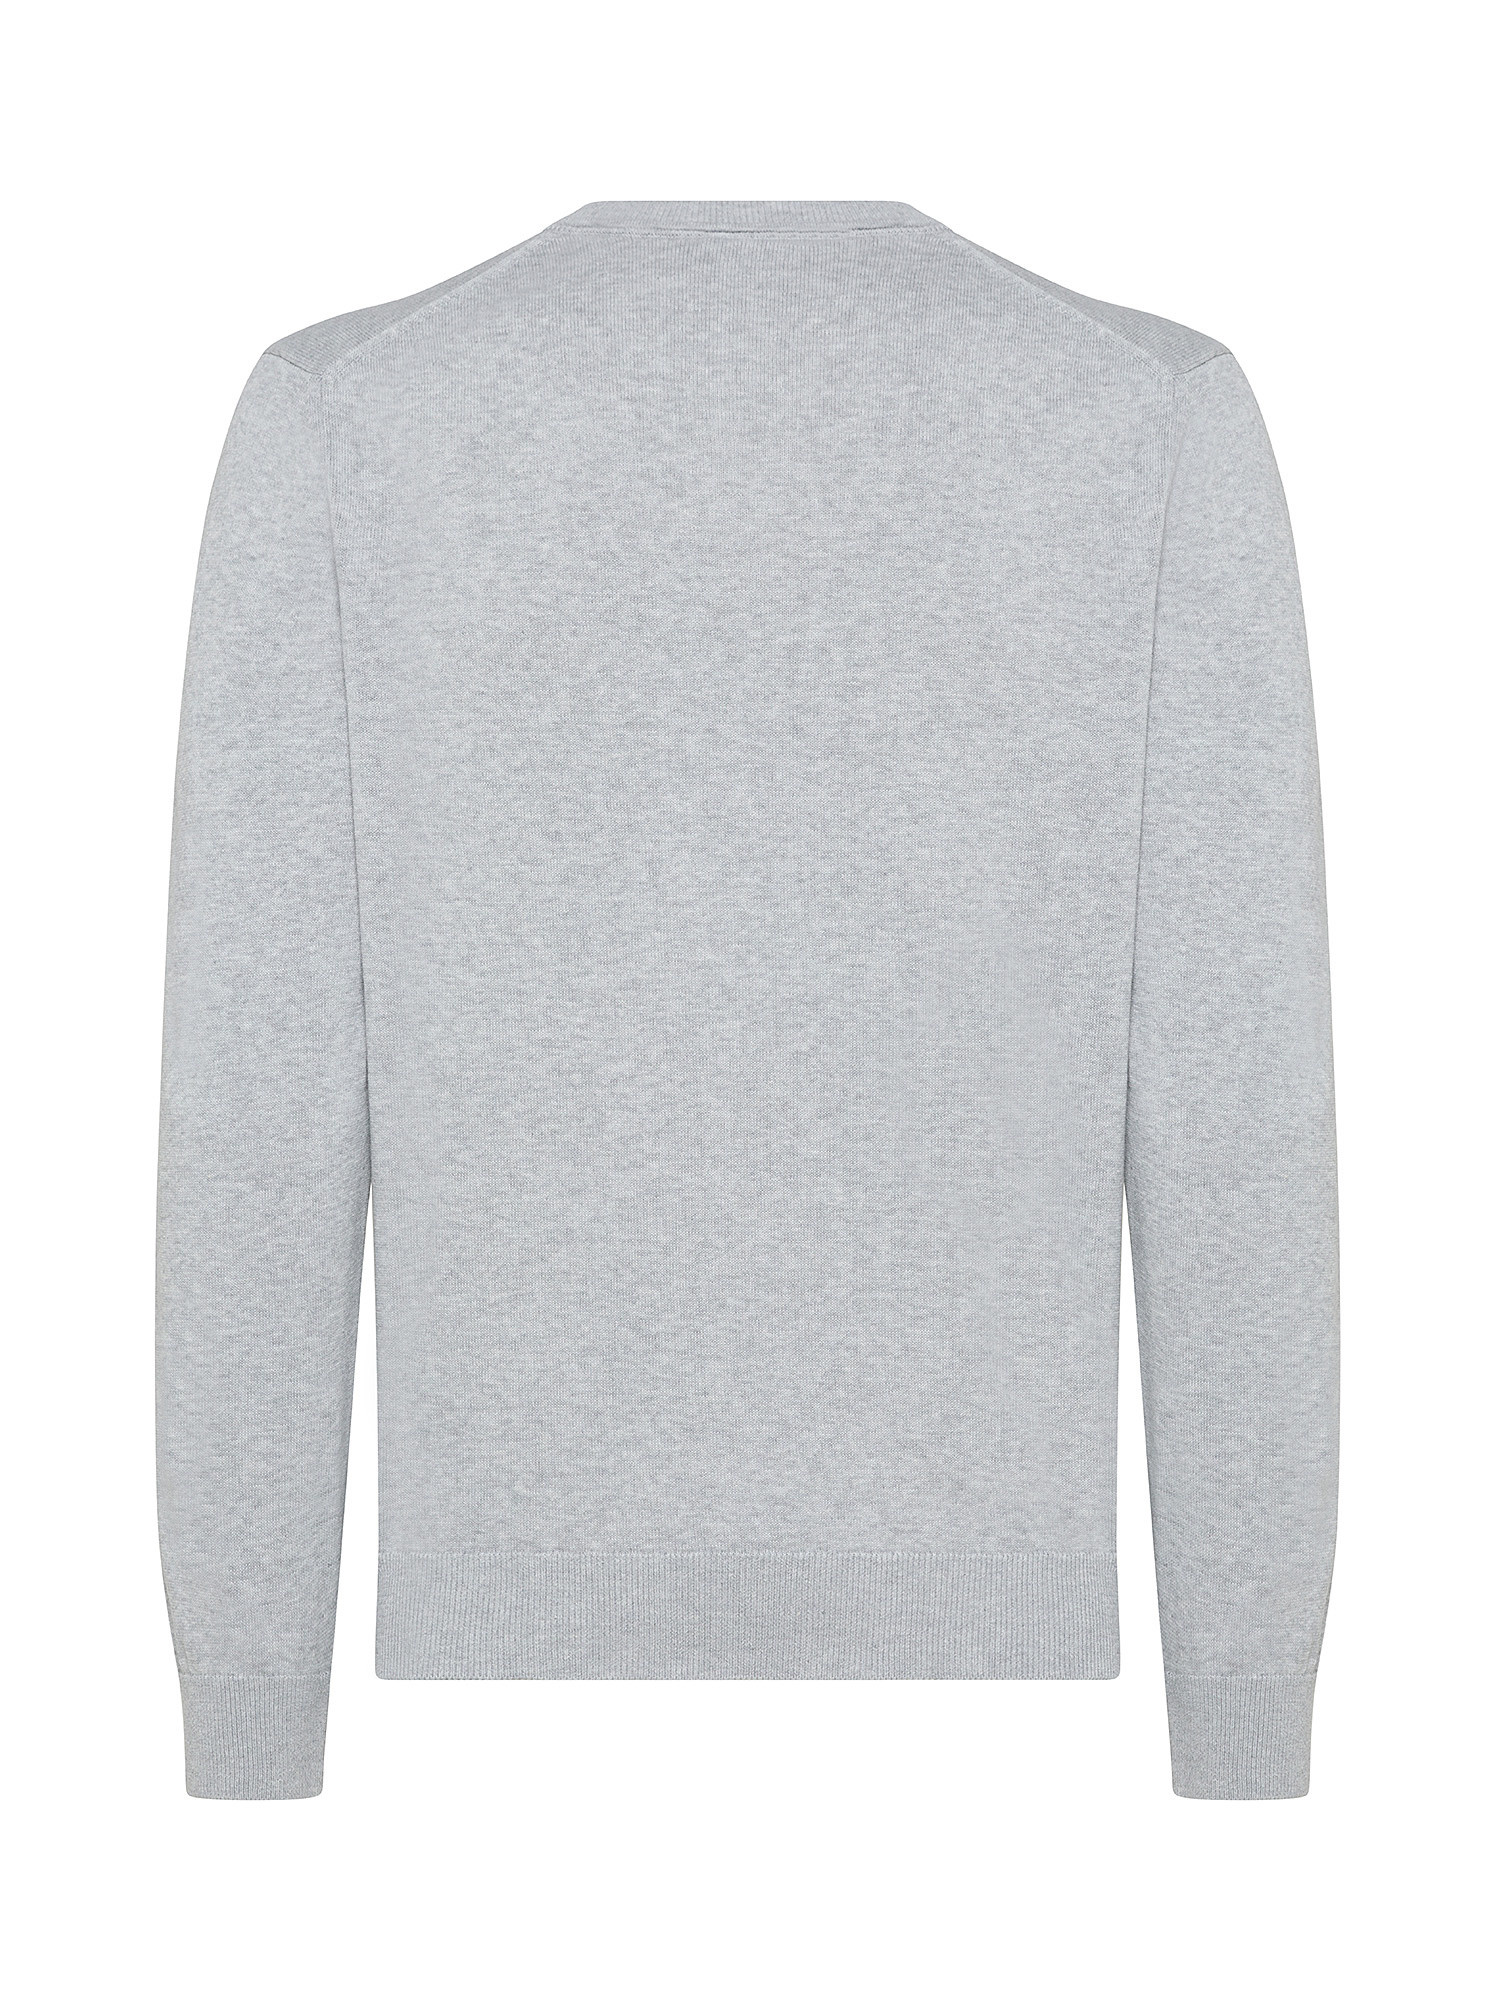 Lacoste - Cotton crewneck sweater, Grey, large image number 1